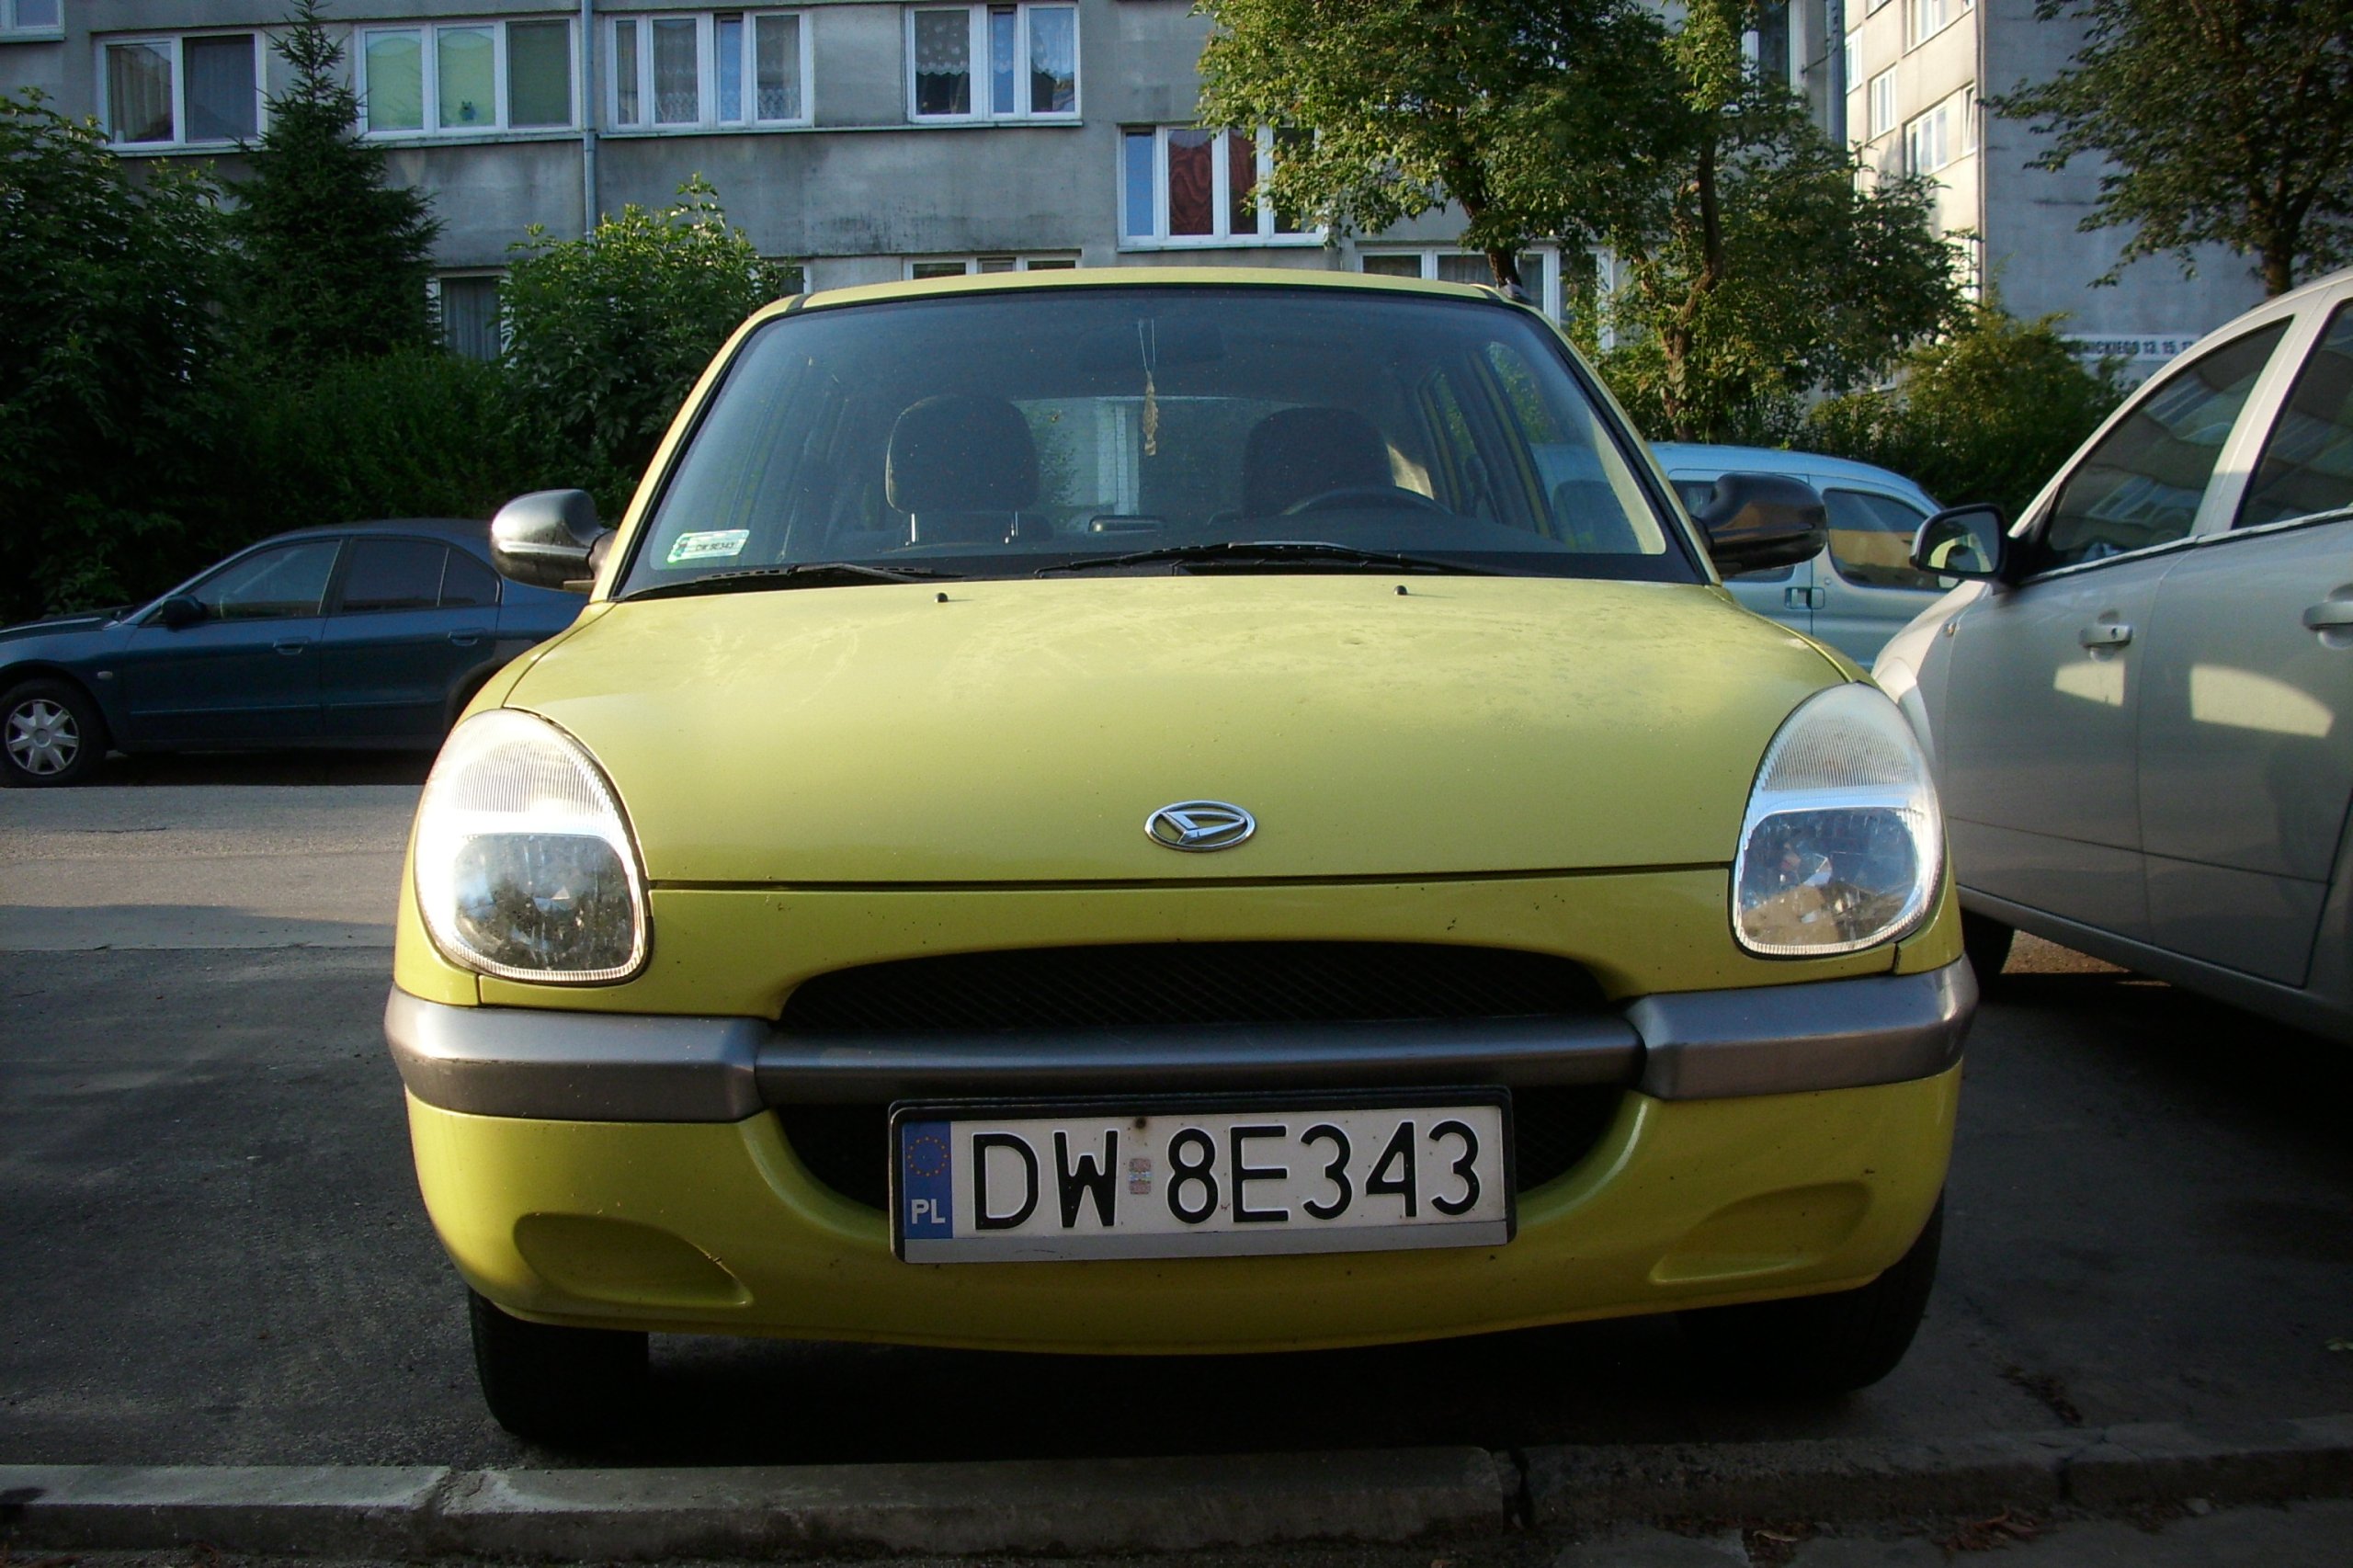 Daihatsu Sirion 1,0 1998r. Pilnie sprzedam TANIO